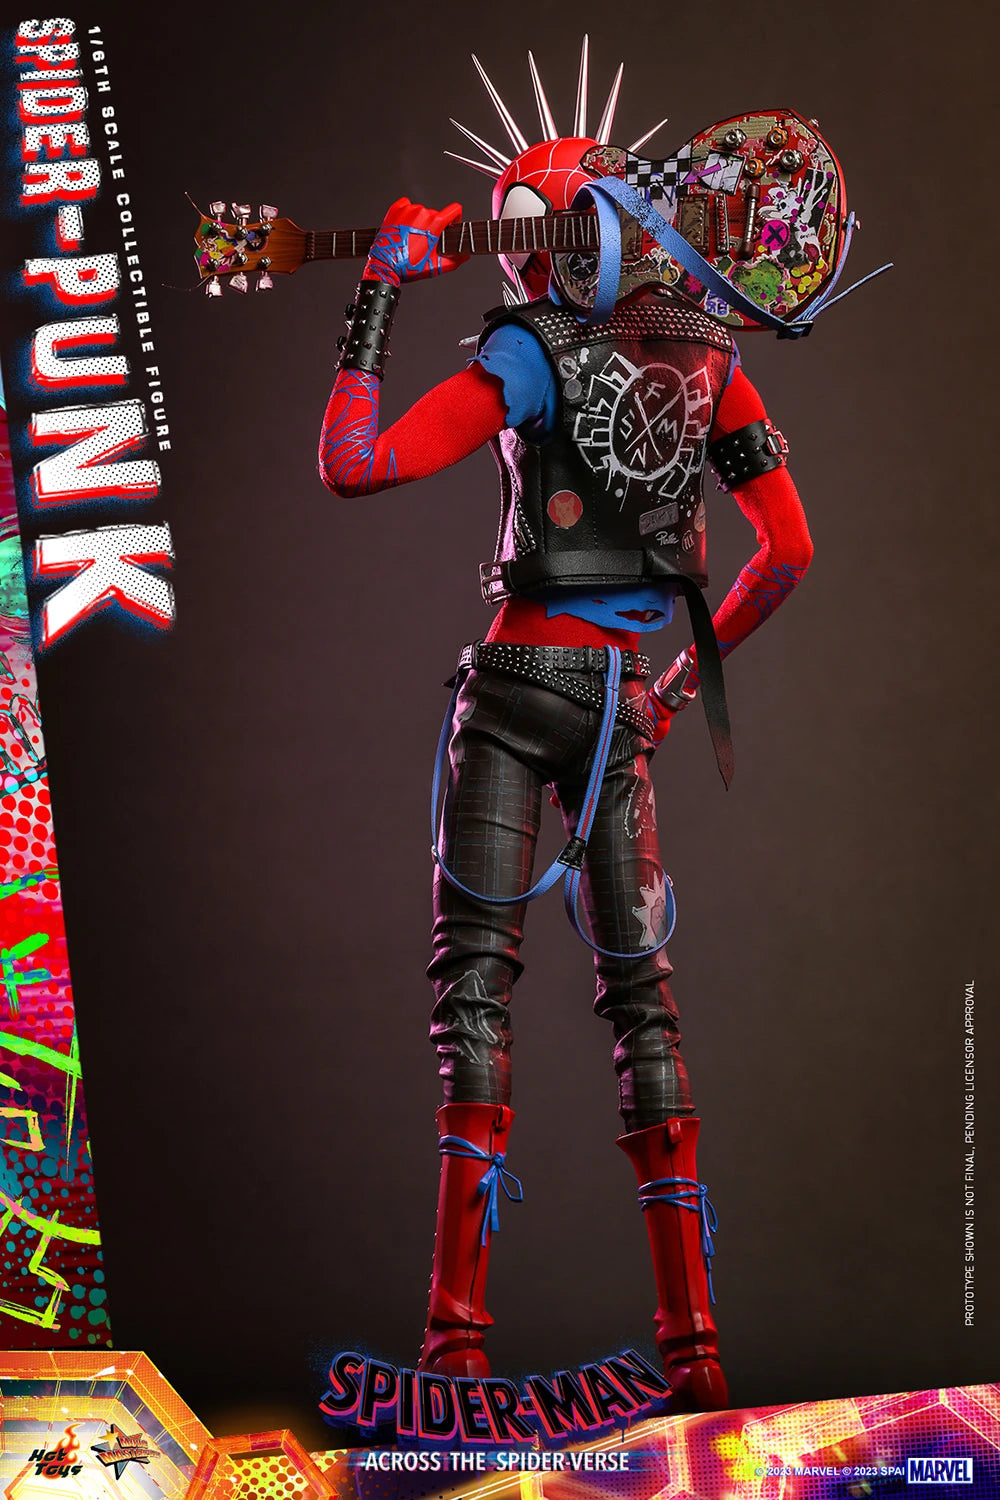 Hot Toys Movie Masterpiece Series: Marvel Spiderman Across The SpiderVerse - Spider Punk Escala 1/6